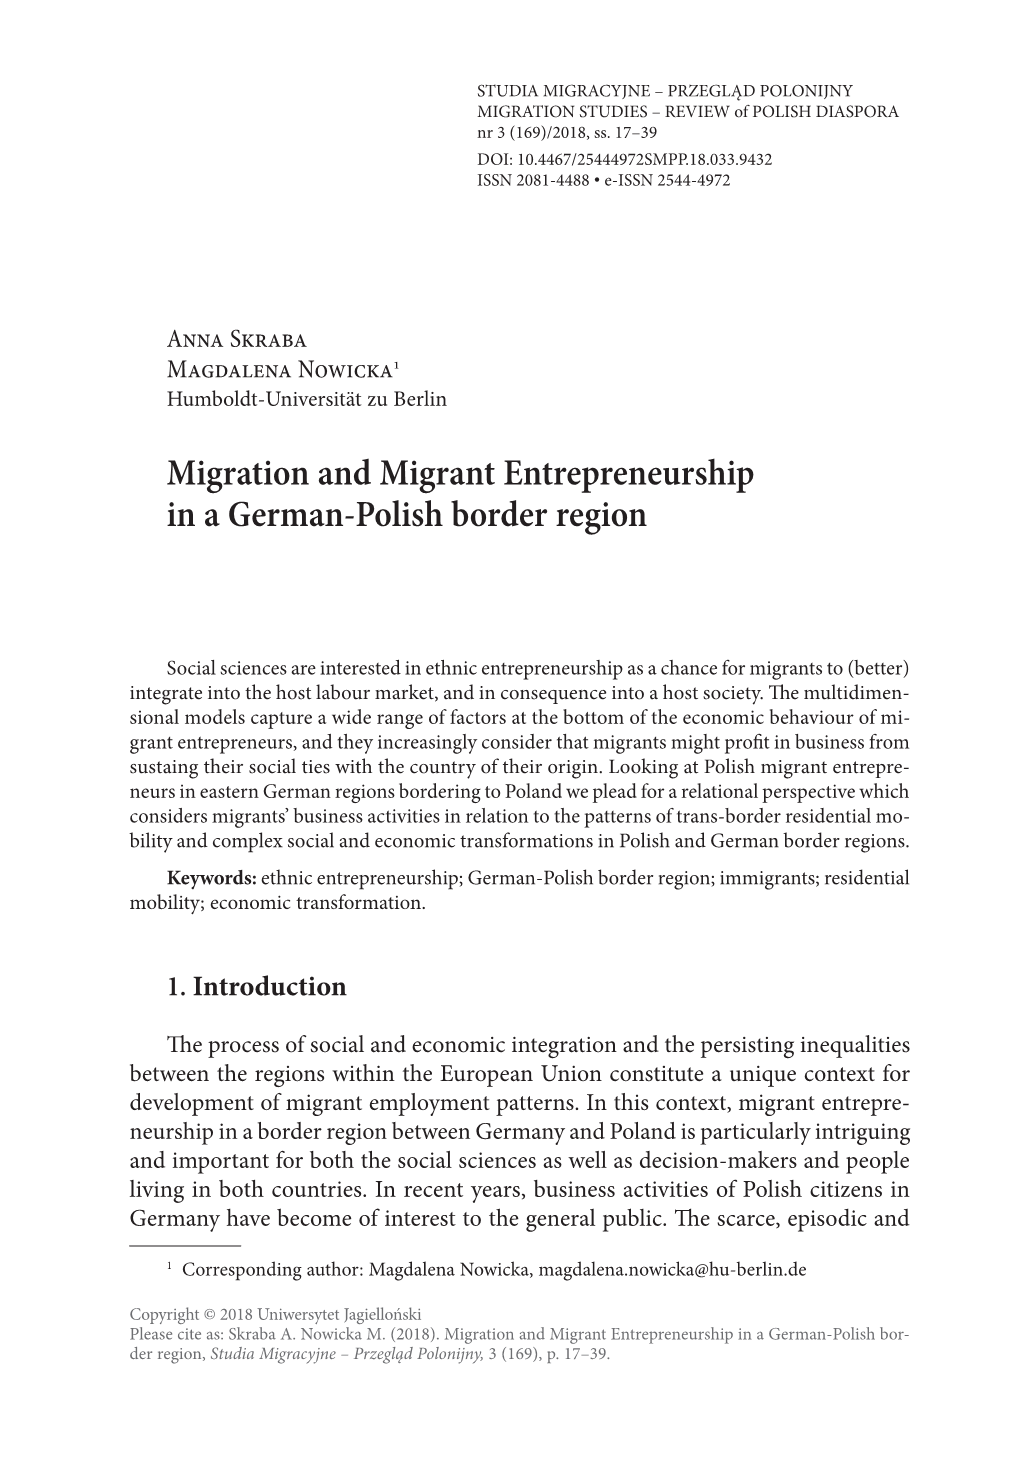 Migration and Migrant Entrepreneurship in a German-Polish Border Region